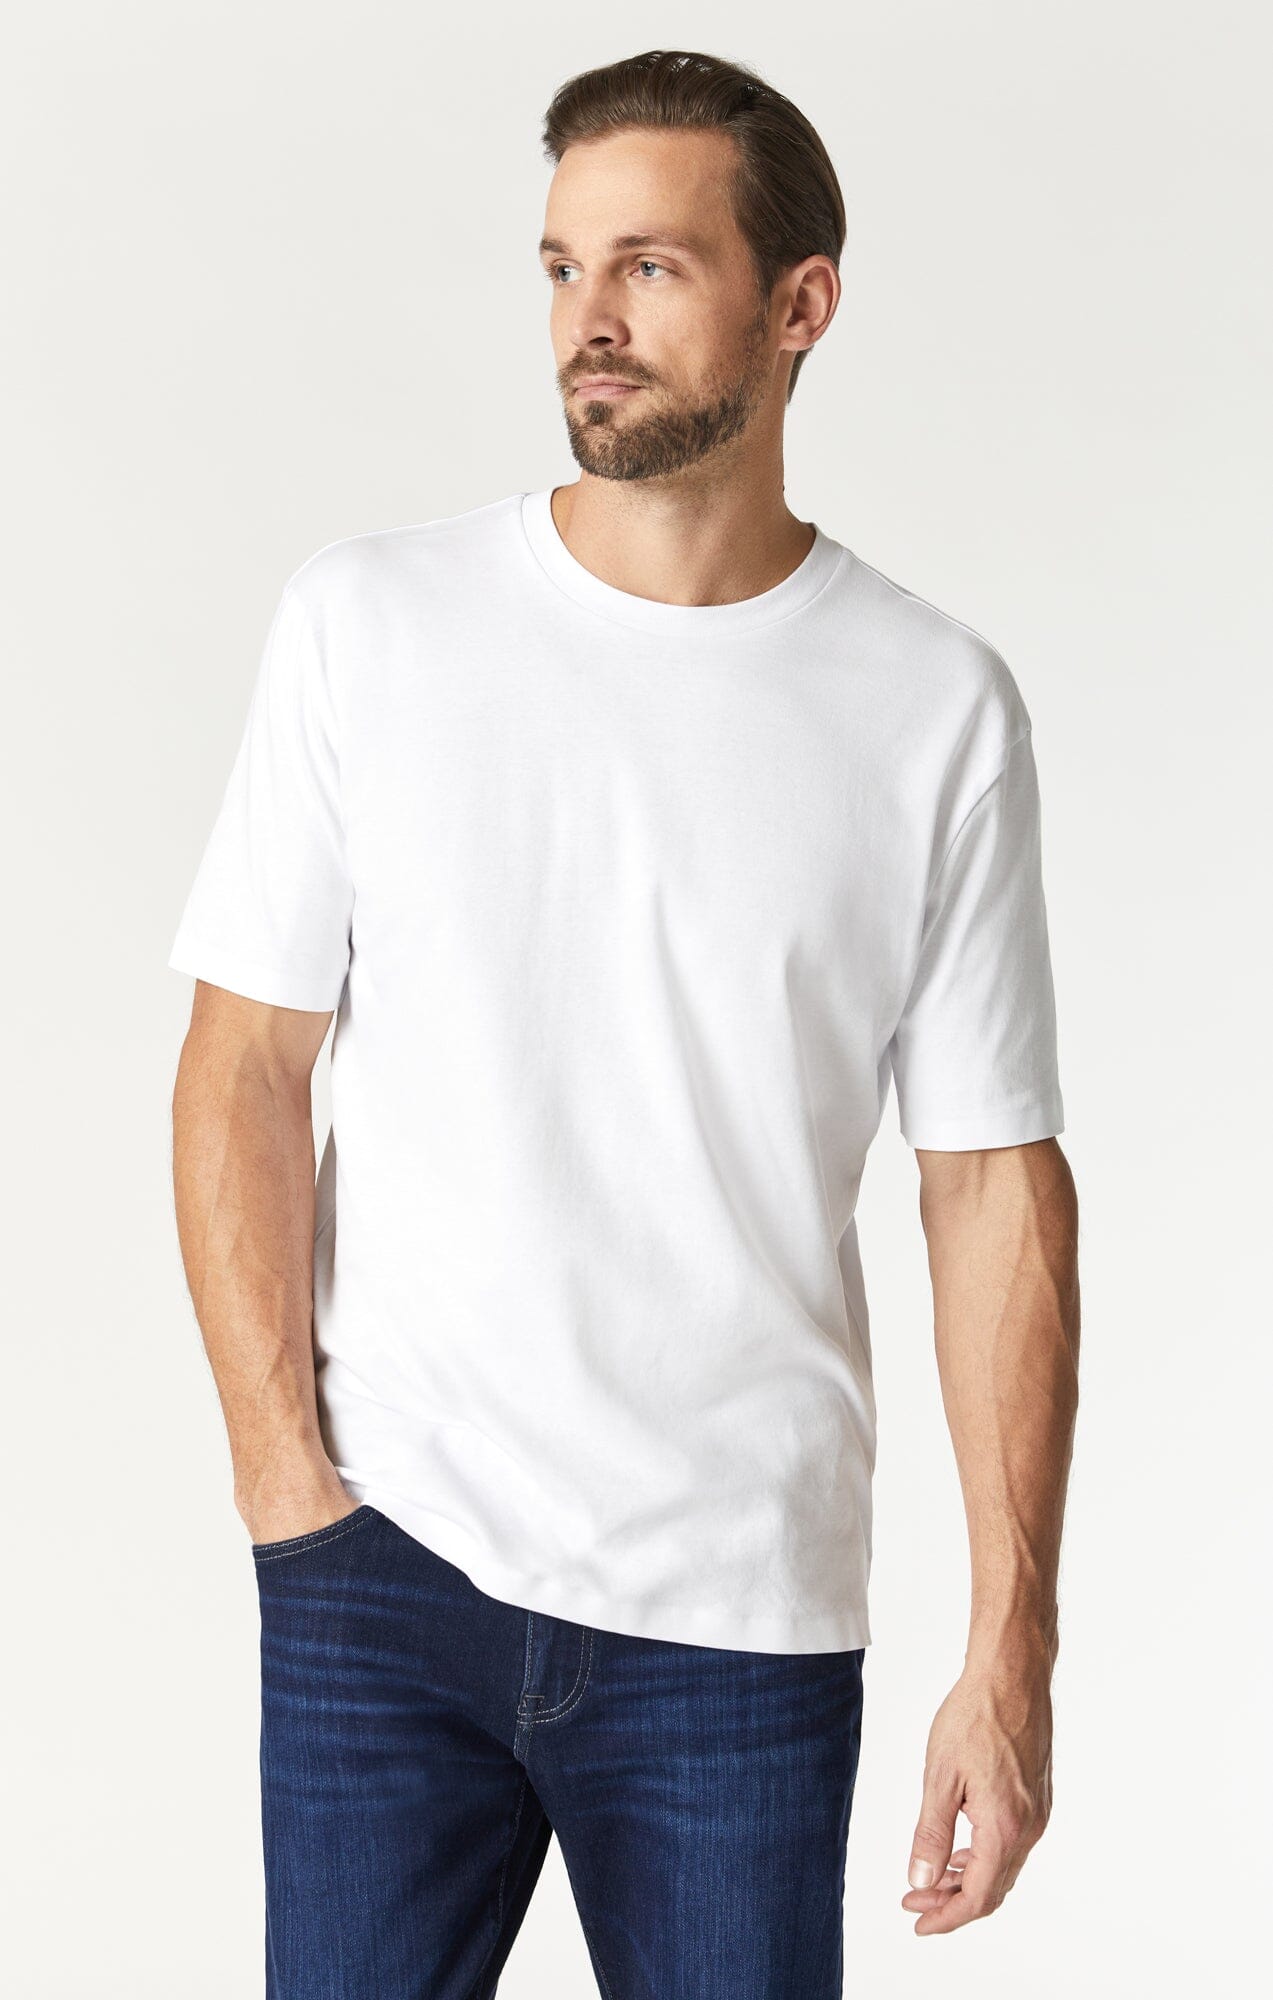 Match Top Tee T-shirt Hommes - Bleu Clair , Blanc